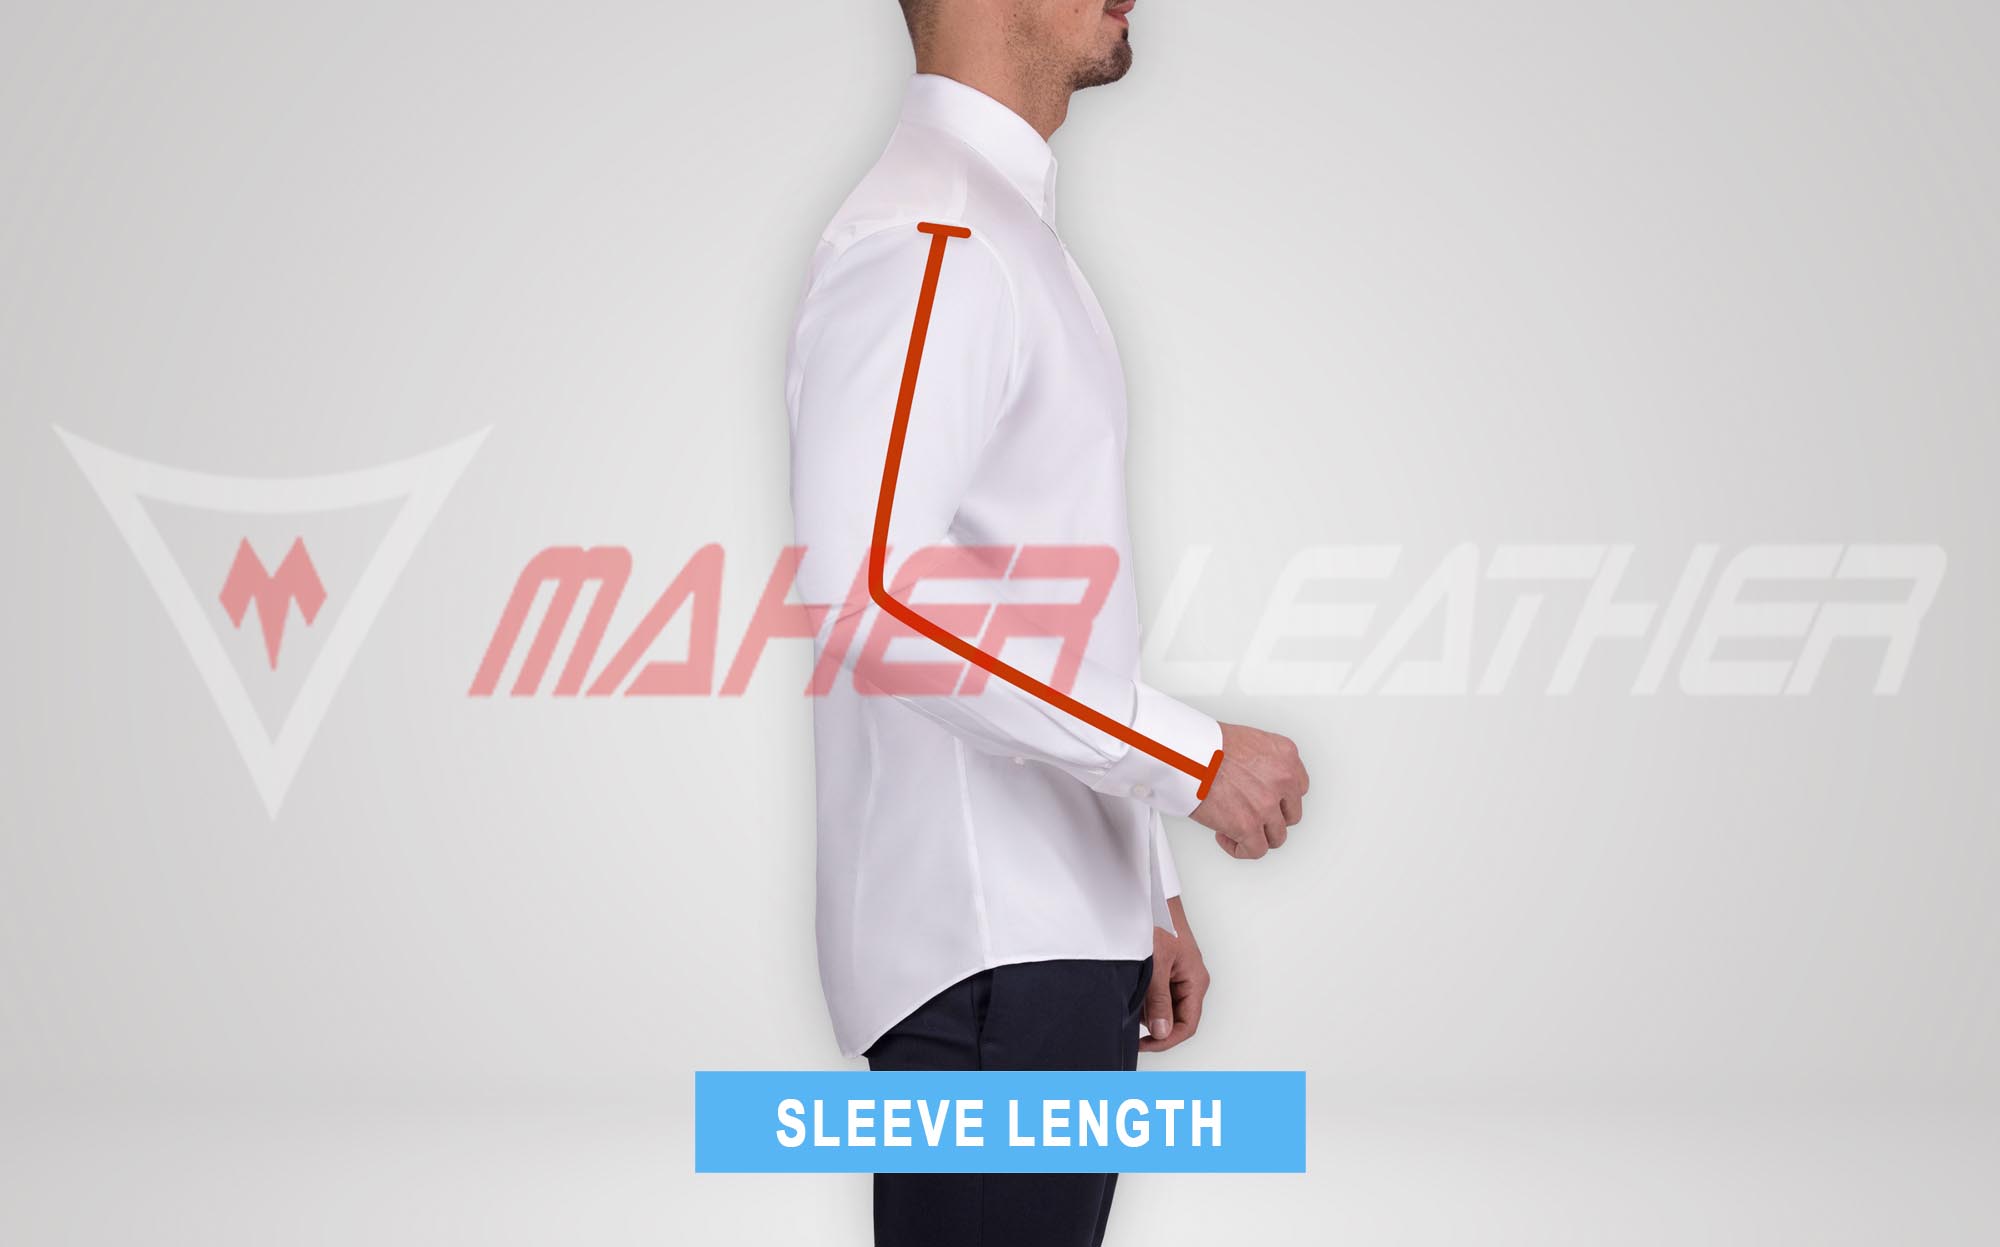 measuring the sleeve length